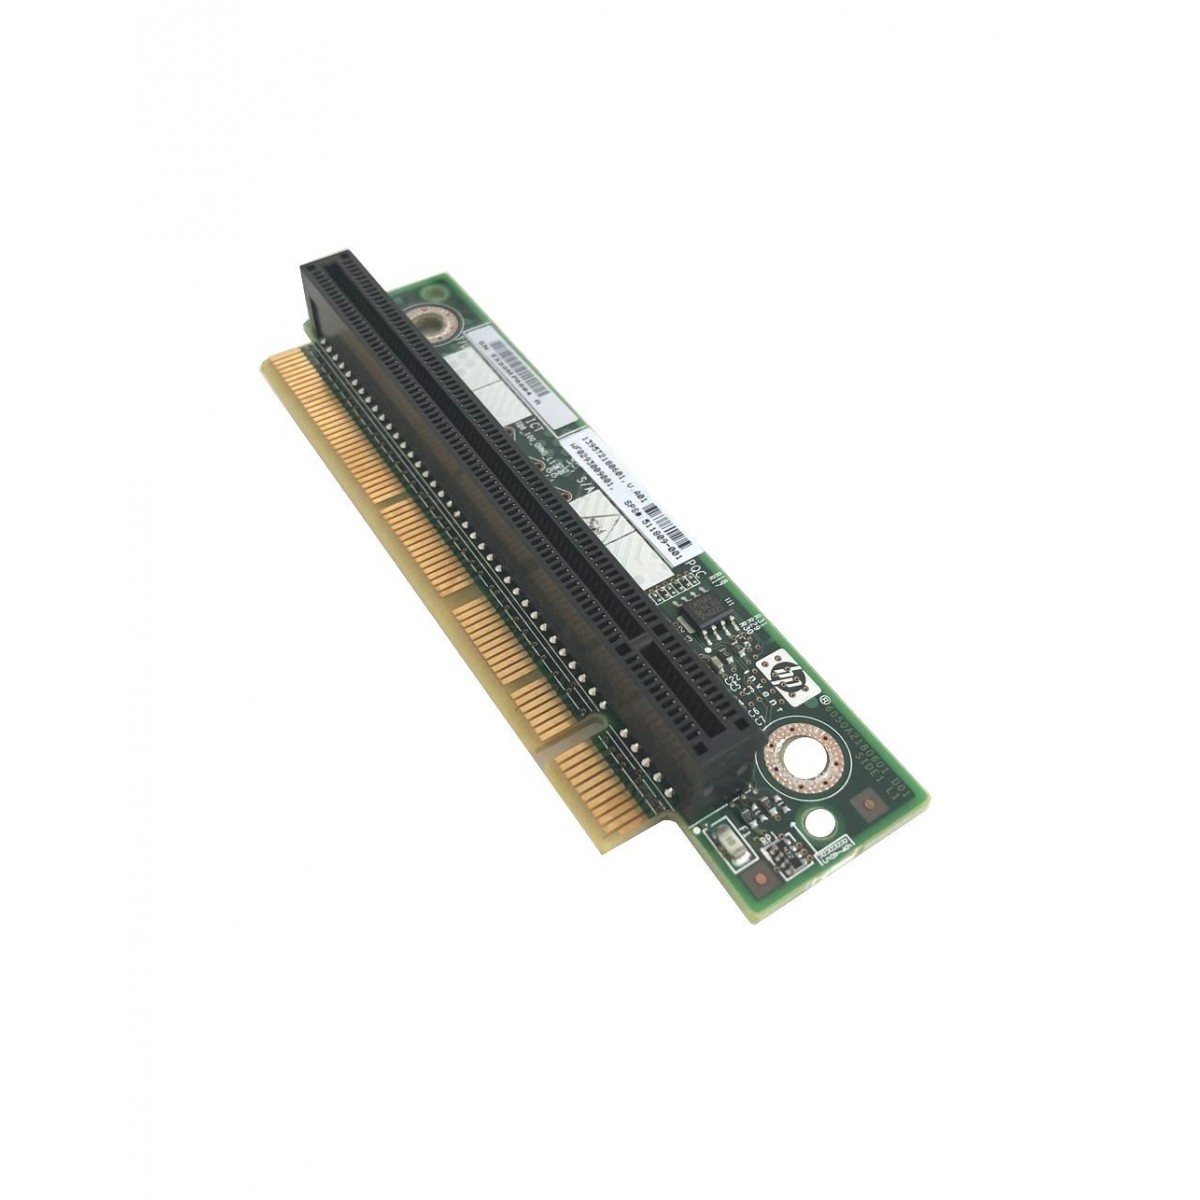 RISER HP DL160 G6 DL320 G6 PCI-E 2.0 490419-001